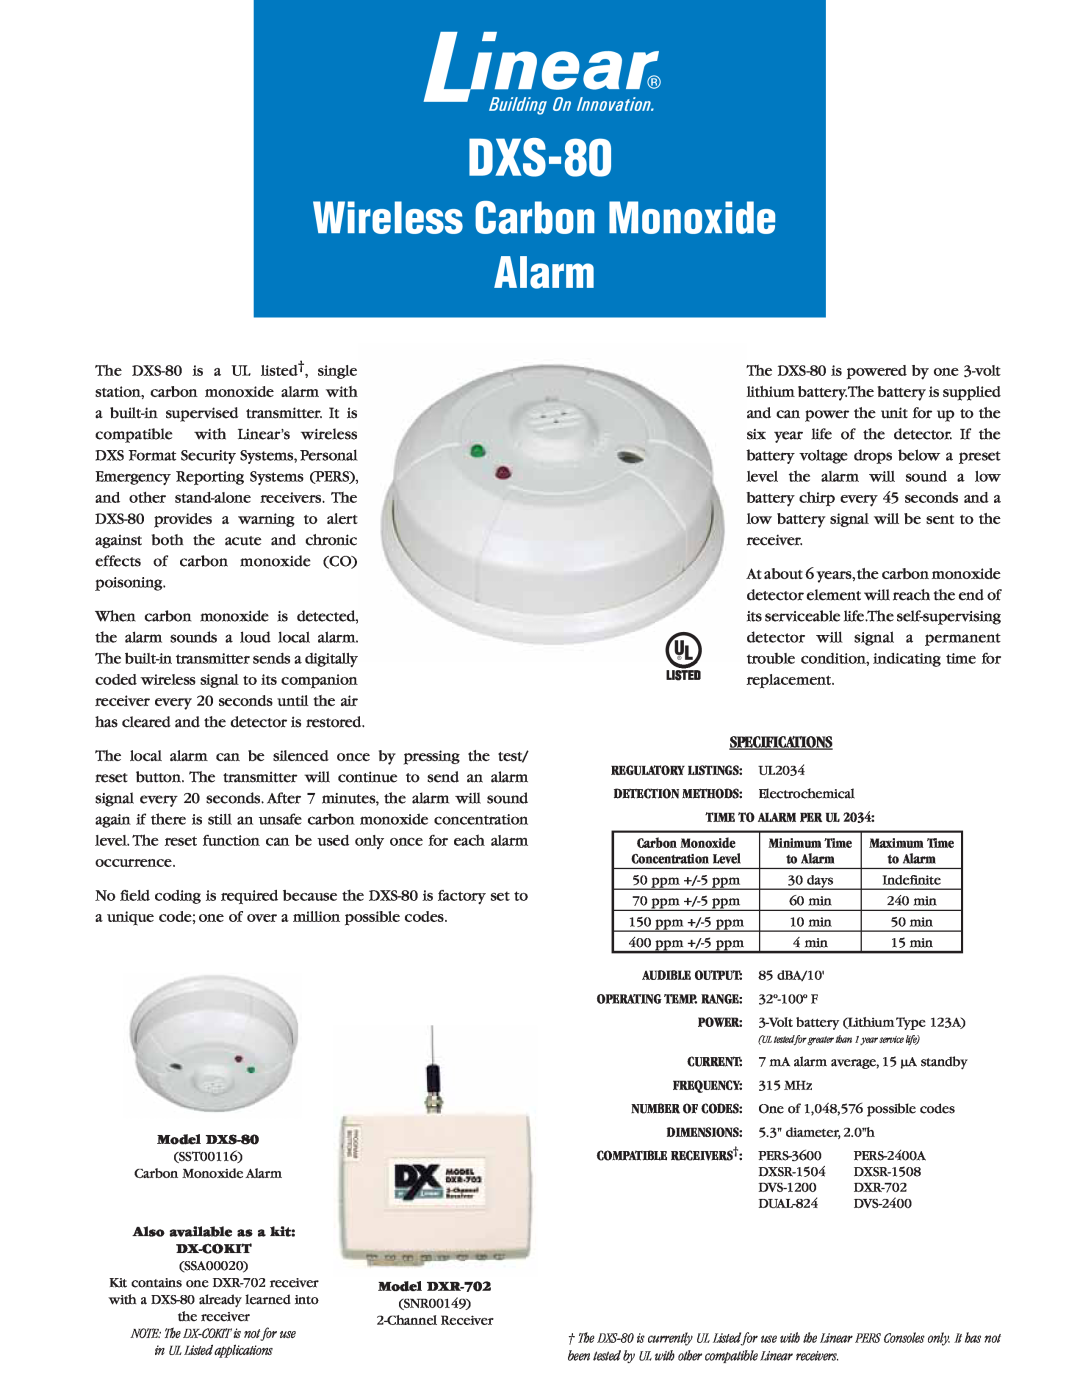 Linear DXS-80 specifications Wireless Carbon Monoxide Alarm, Specifications 